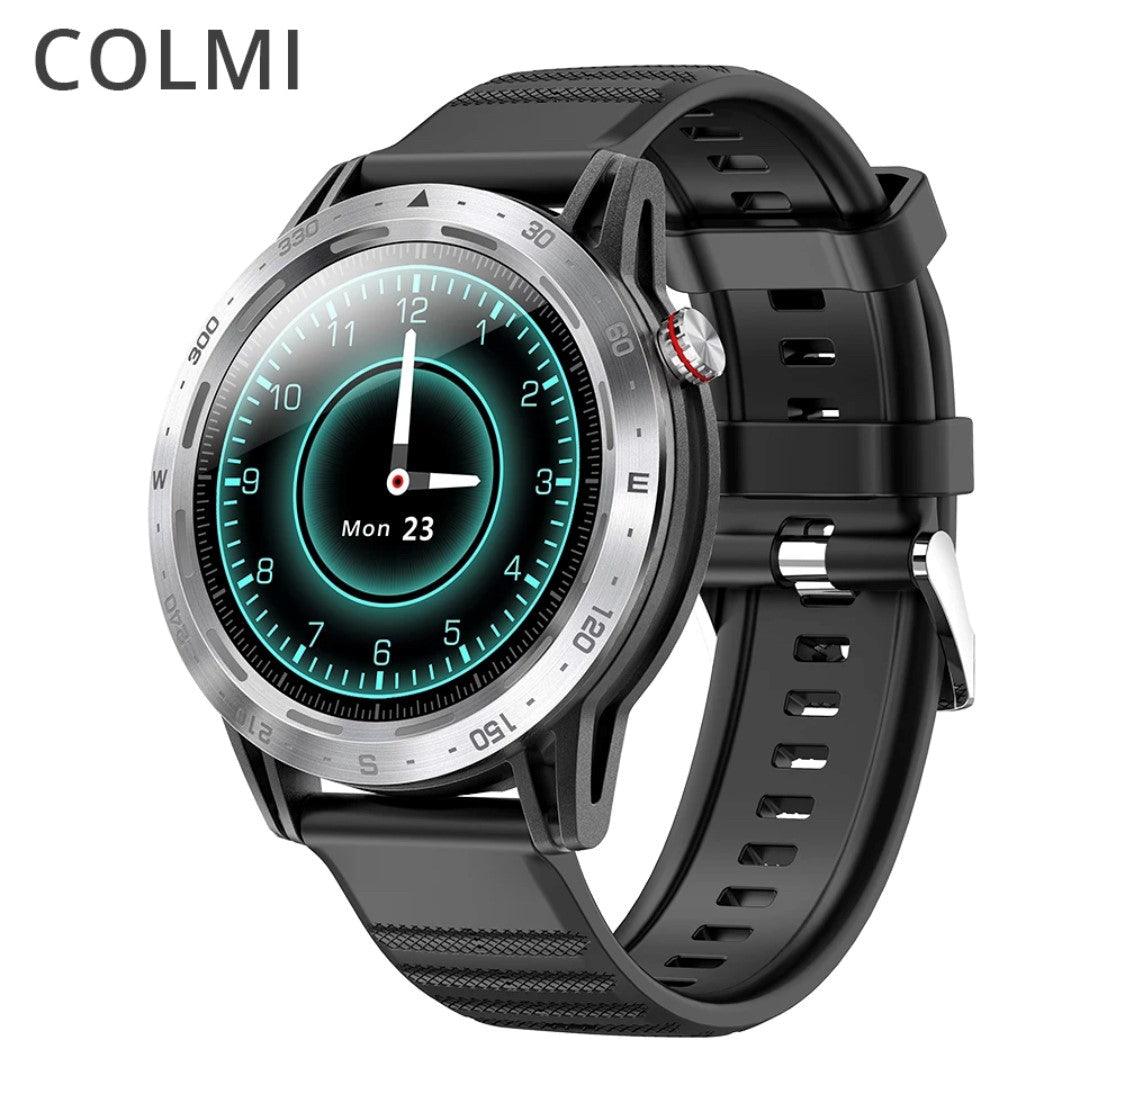 COLMI SKY 7 Pro Silver & Black Smart Watch South Africa